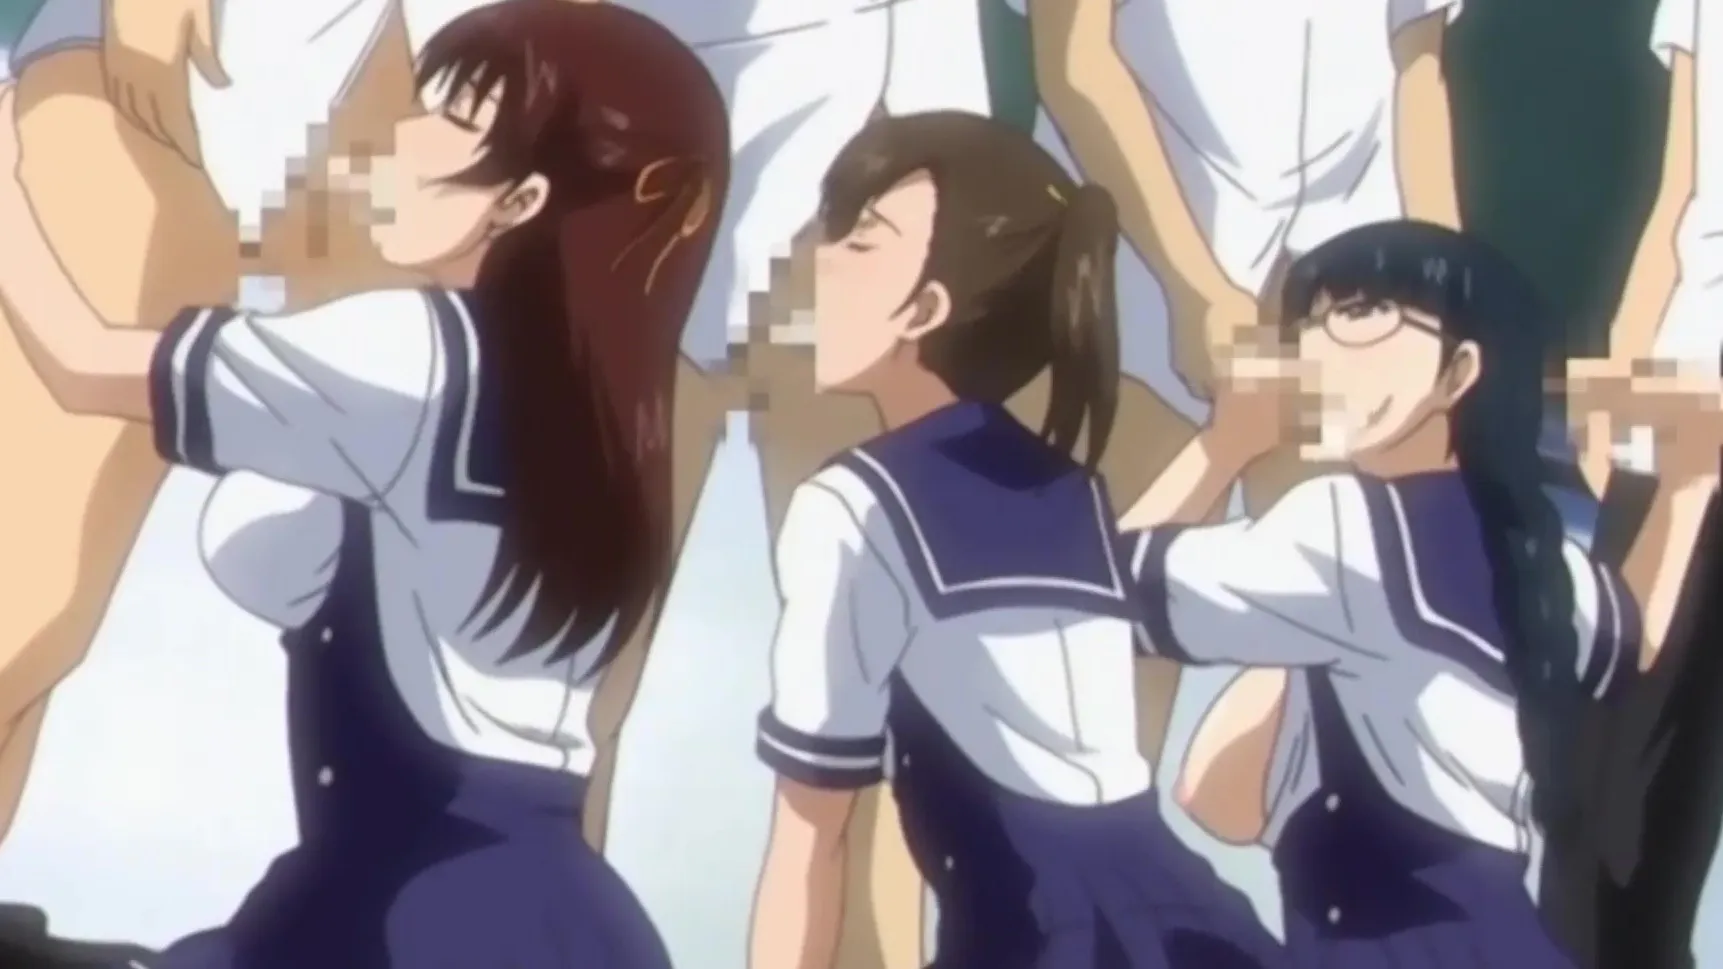 Anime Hentai Sex School - Hentai school girls know how to please their cocky classmates